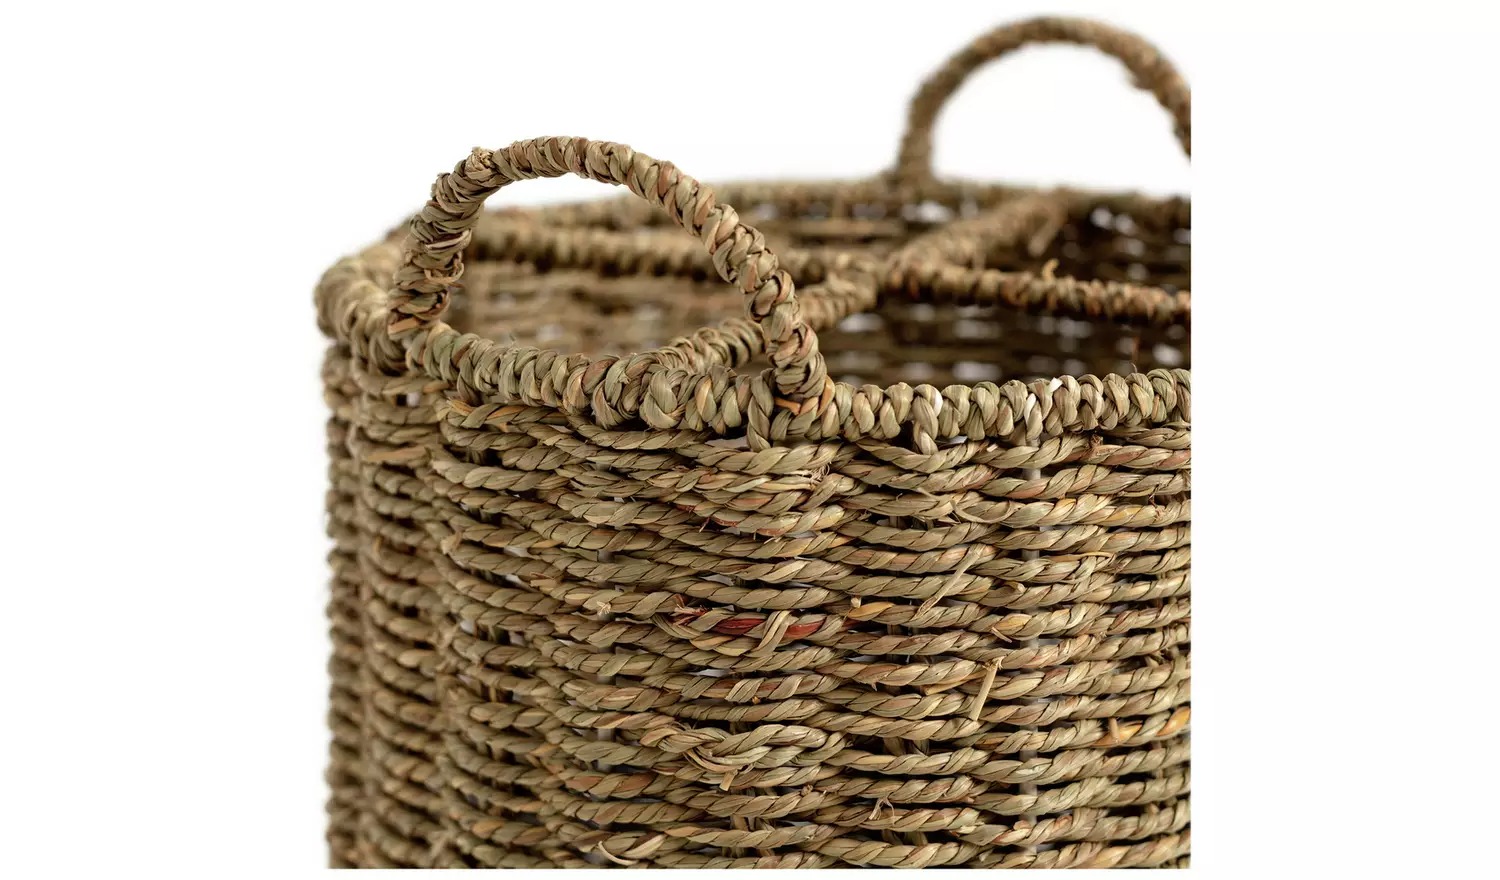 Seagrass Umbrella Basket